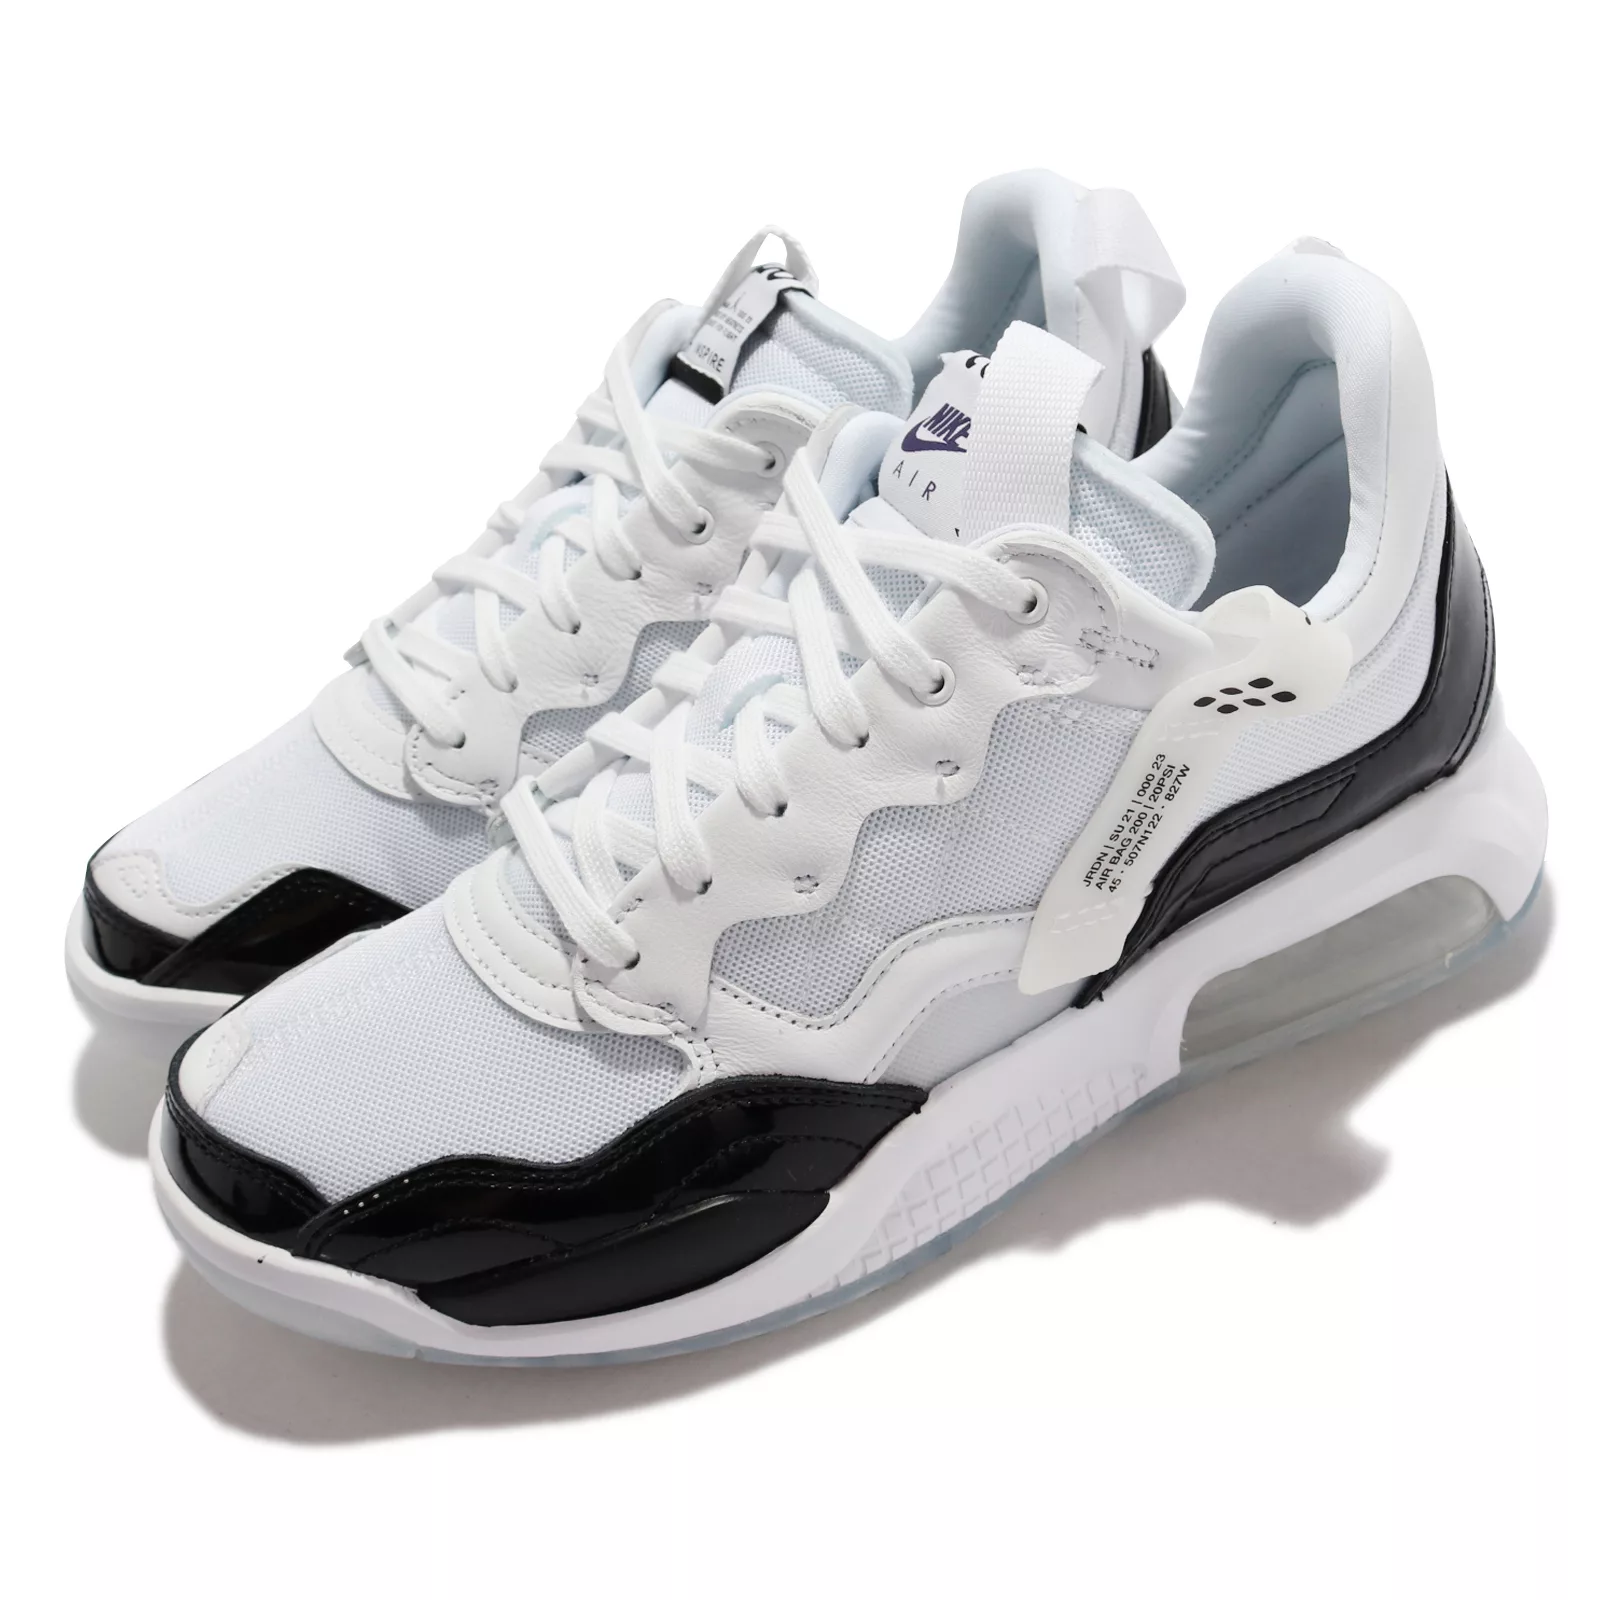 Nike 休閒鞋 Jordan MA2 喬丹 運動 男鞋 海外限定 氣墊 異材質拼接 穿搭 Concord配色 白 黑 CV8122-105 26.5cm WHITE/BLACK